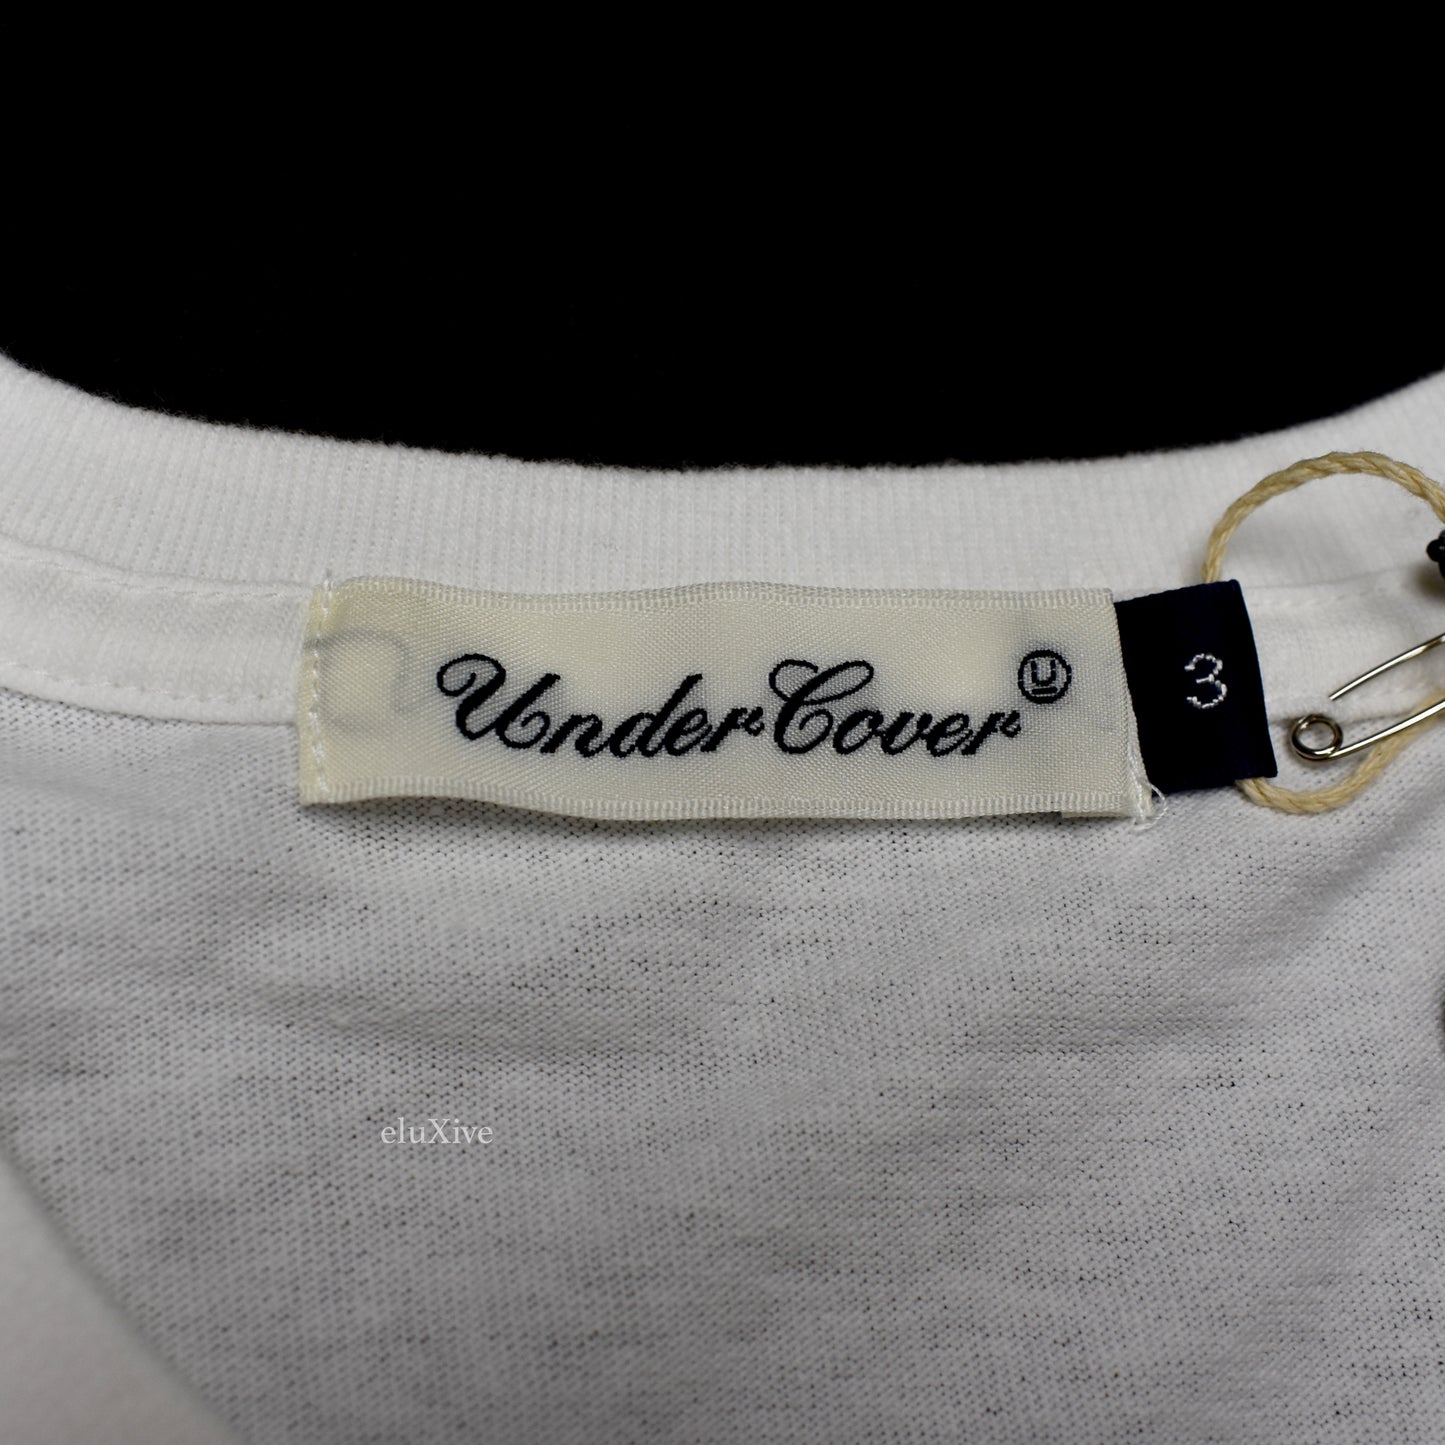 Undercover - A Clockwork Orange Logo T-Shirt (White)